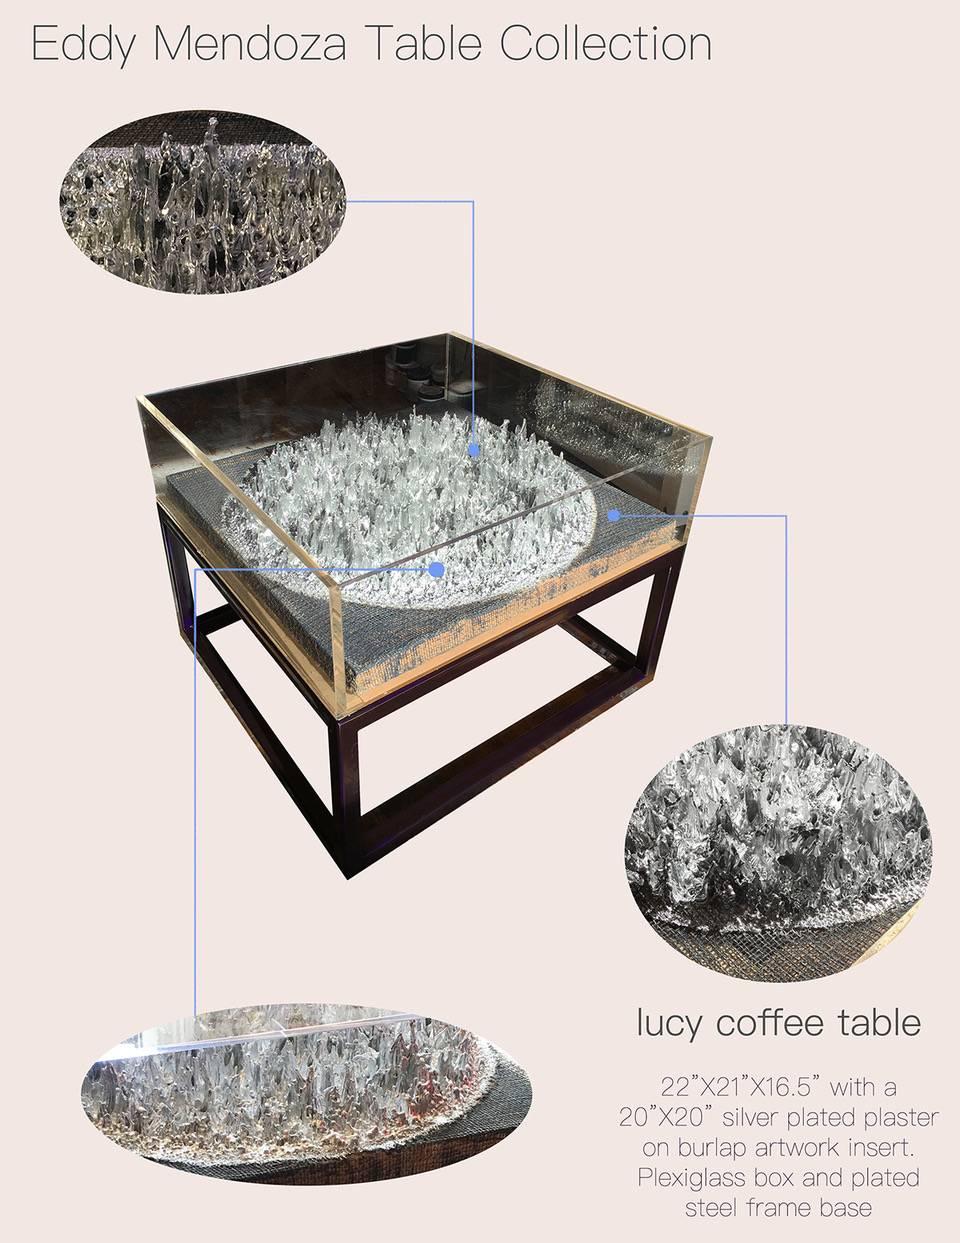 Eddy Mendoza Table Collection - Lucy Coffee Table with metal 3D artwork - Minimalist Mixed Media Art by Eduardo Terranova